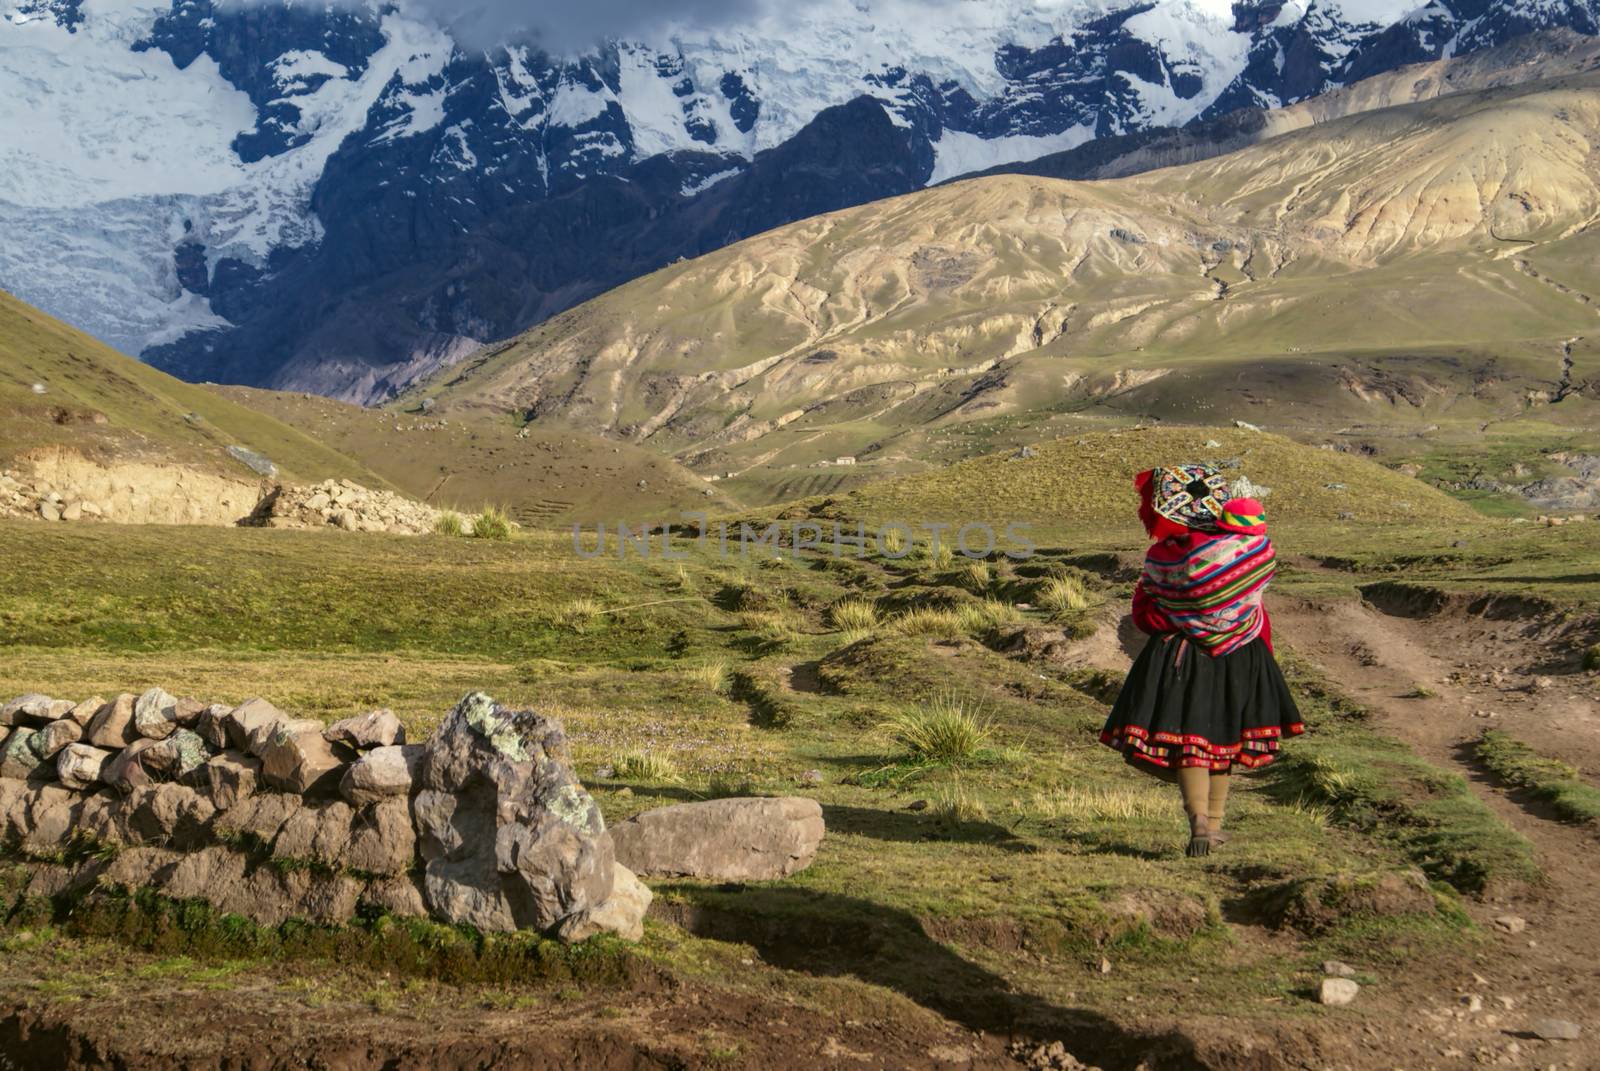 Peruvian woman by MichalKnitl